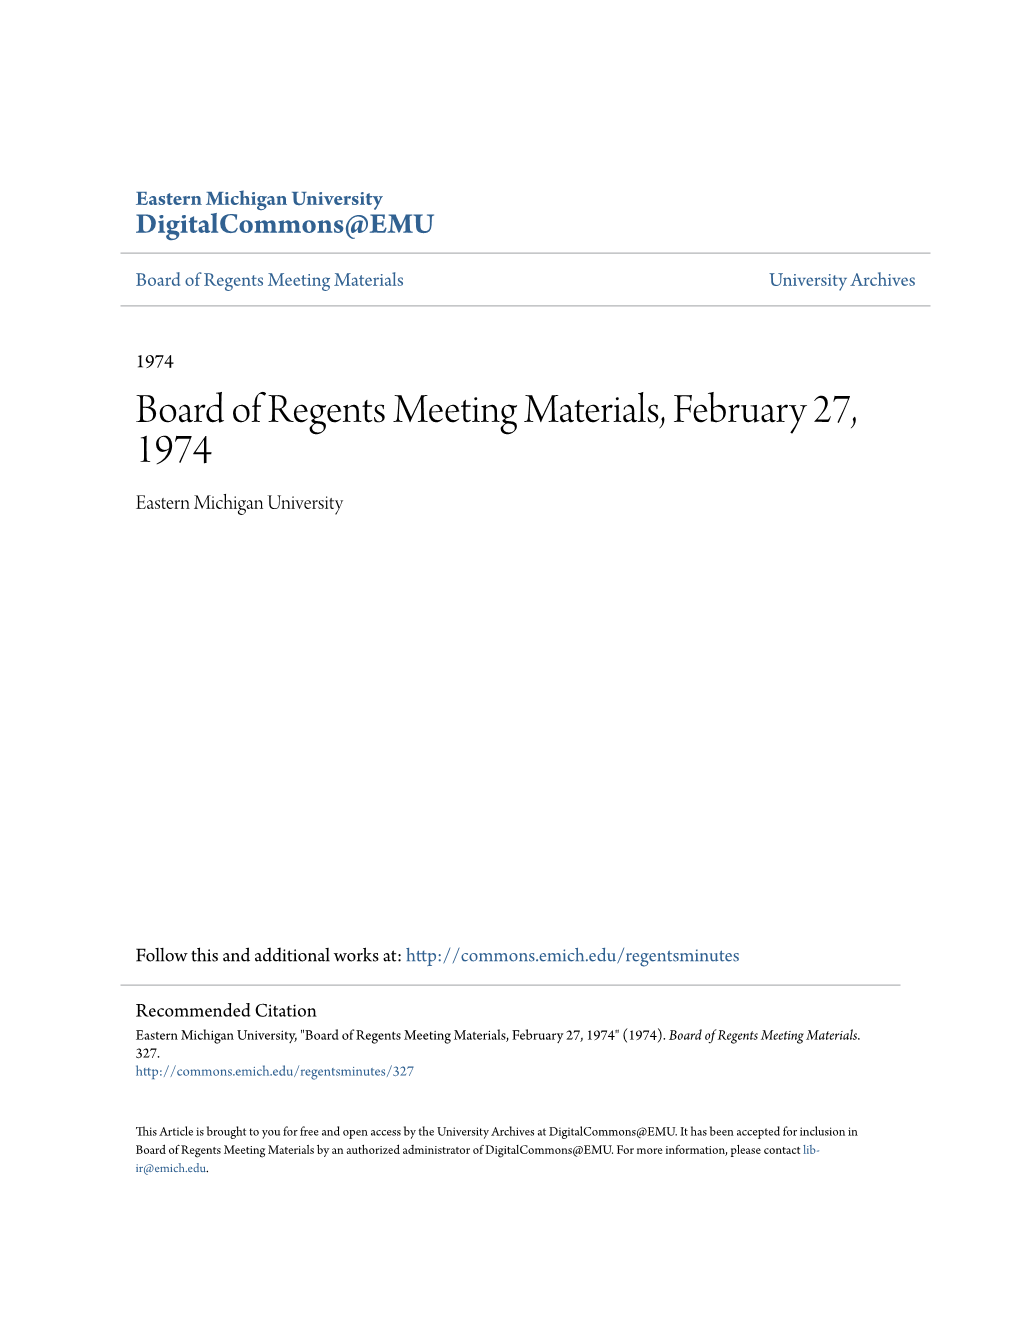 Board of Regents Meeting Materials, February 27, 1974 Eastern Michigan University